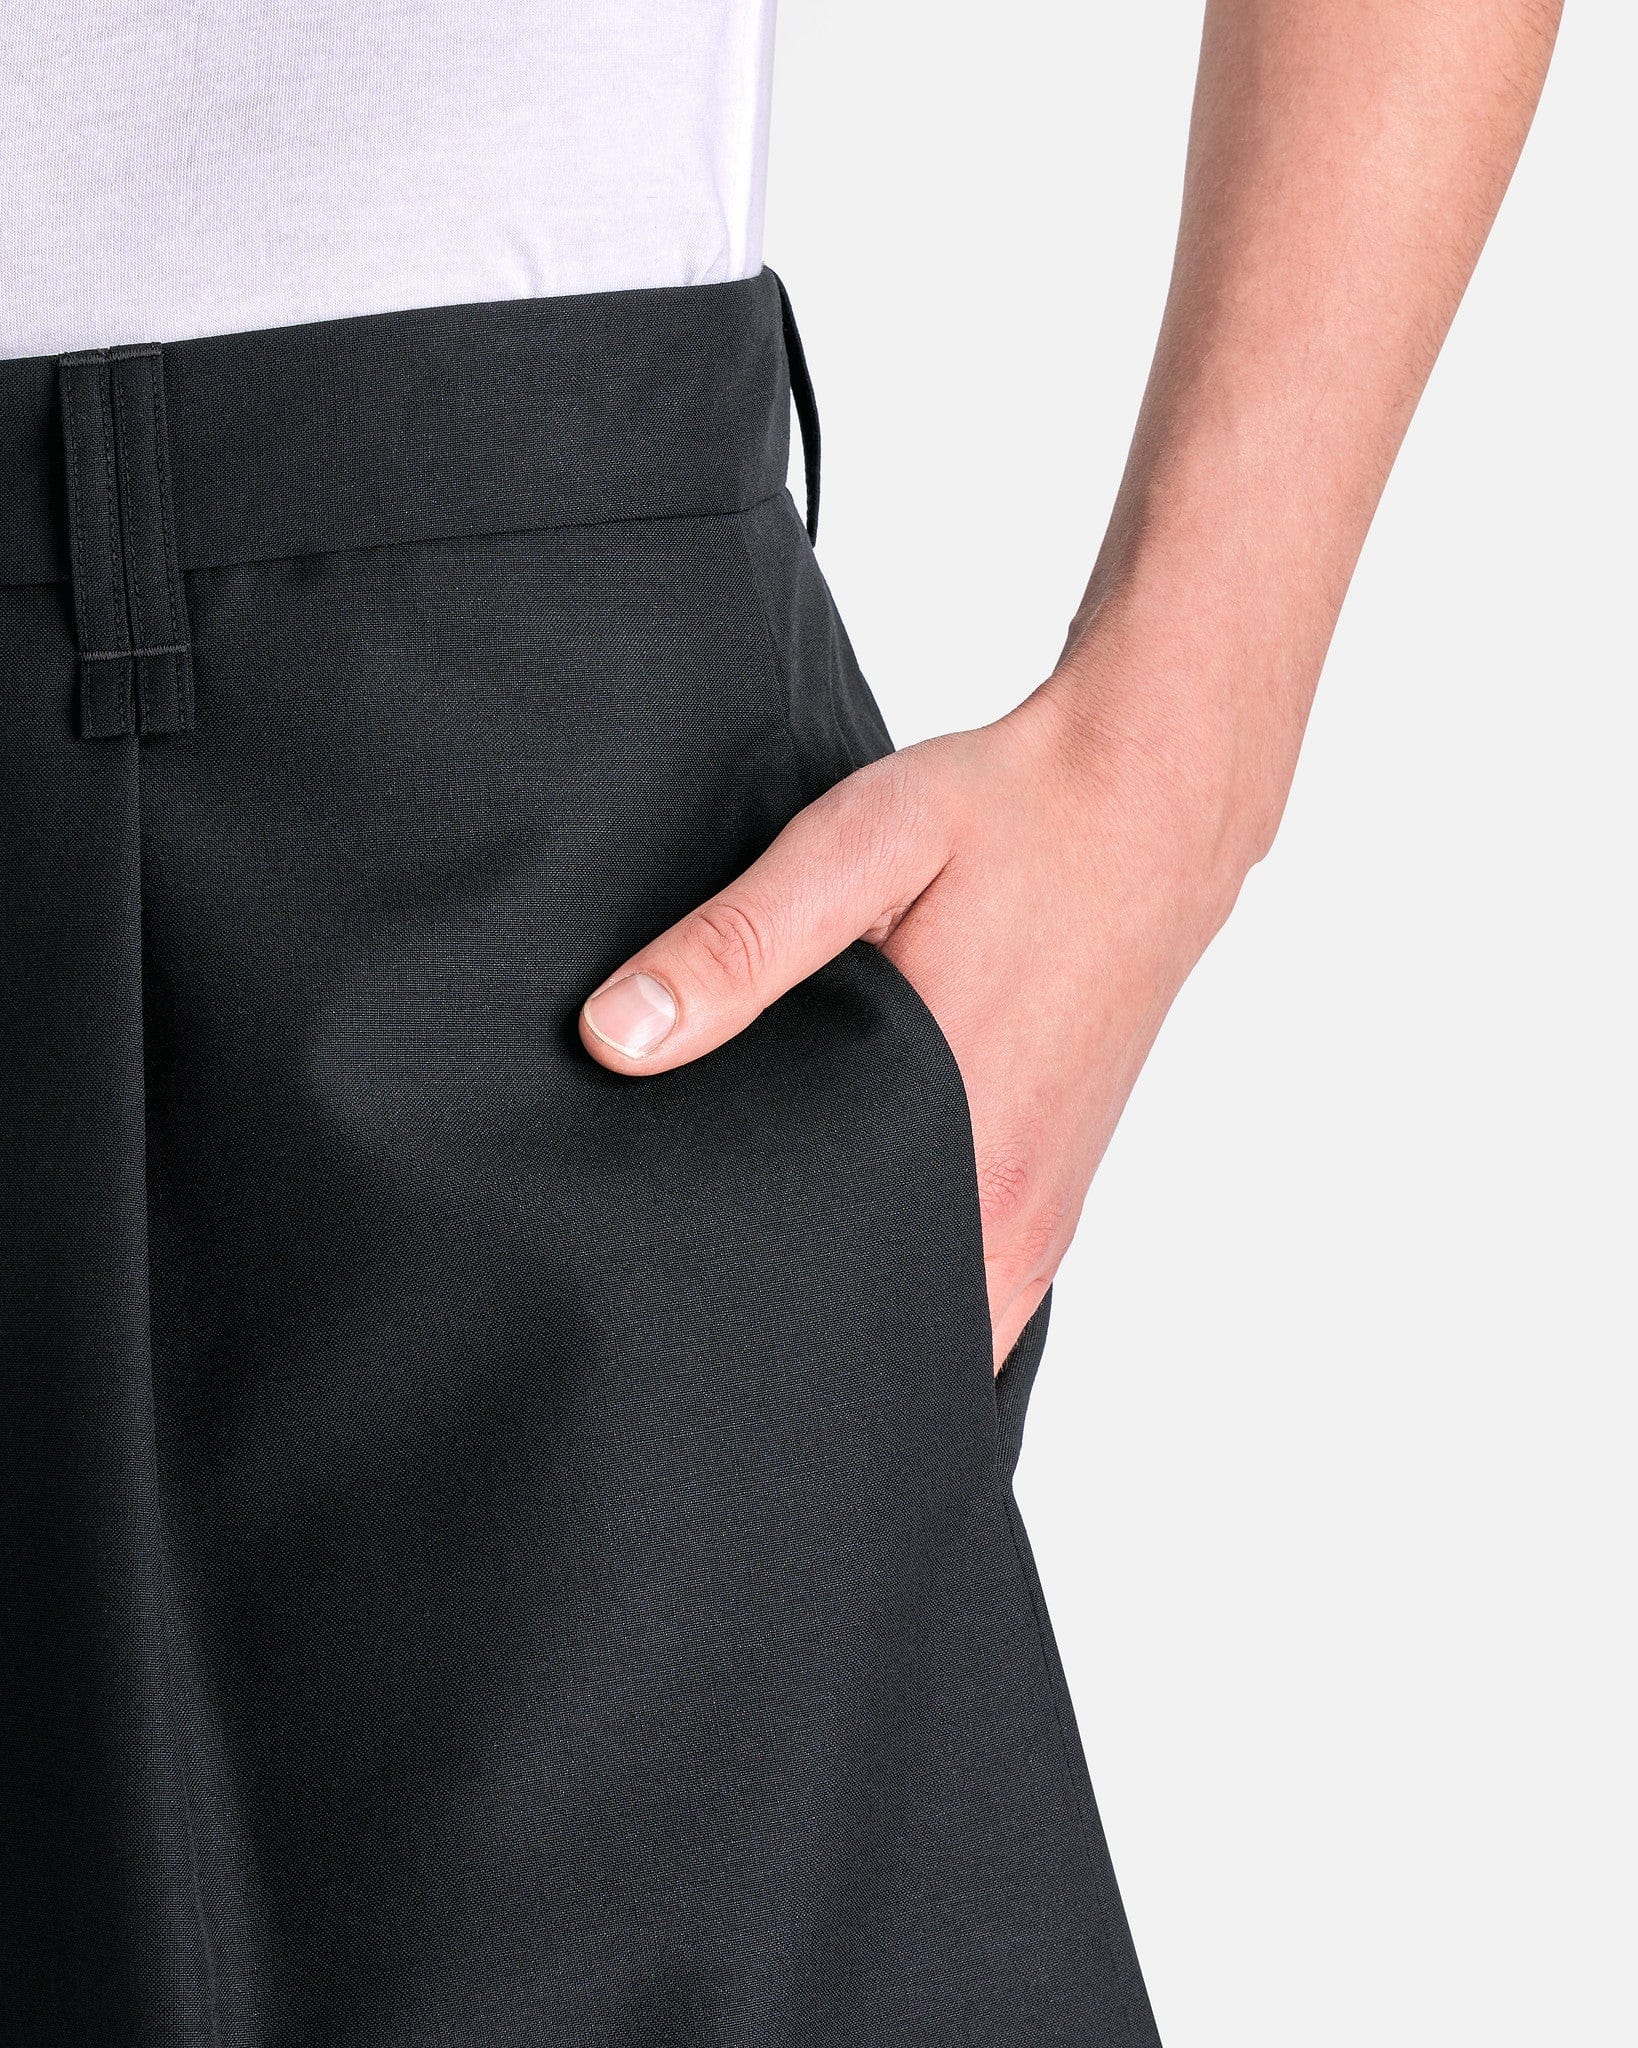 Simone Rocha Men's Shorts Sculpted Newsboy Shorts with Cuff in Black